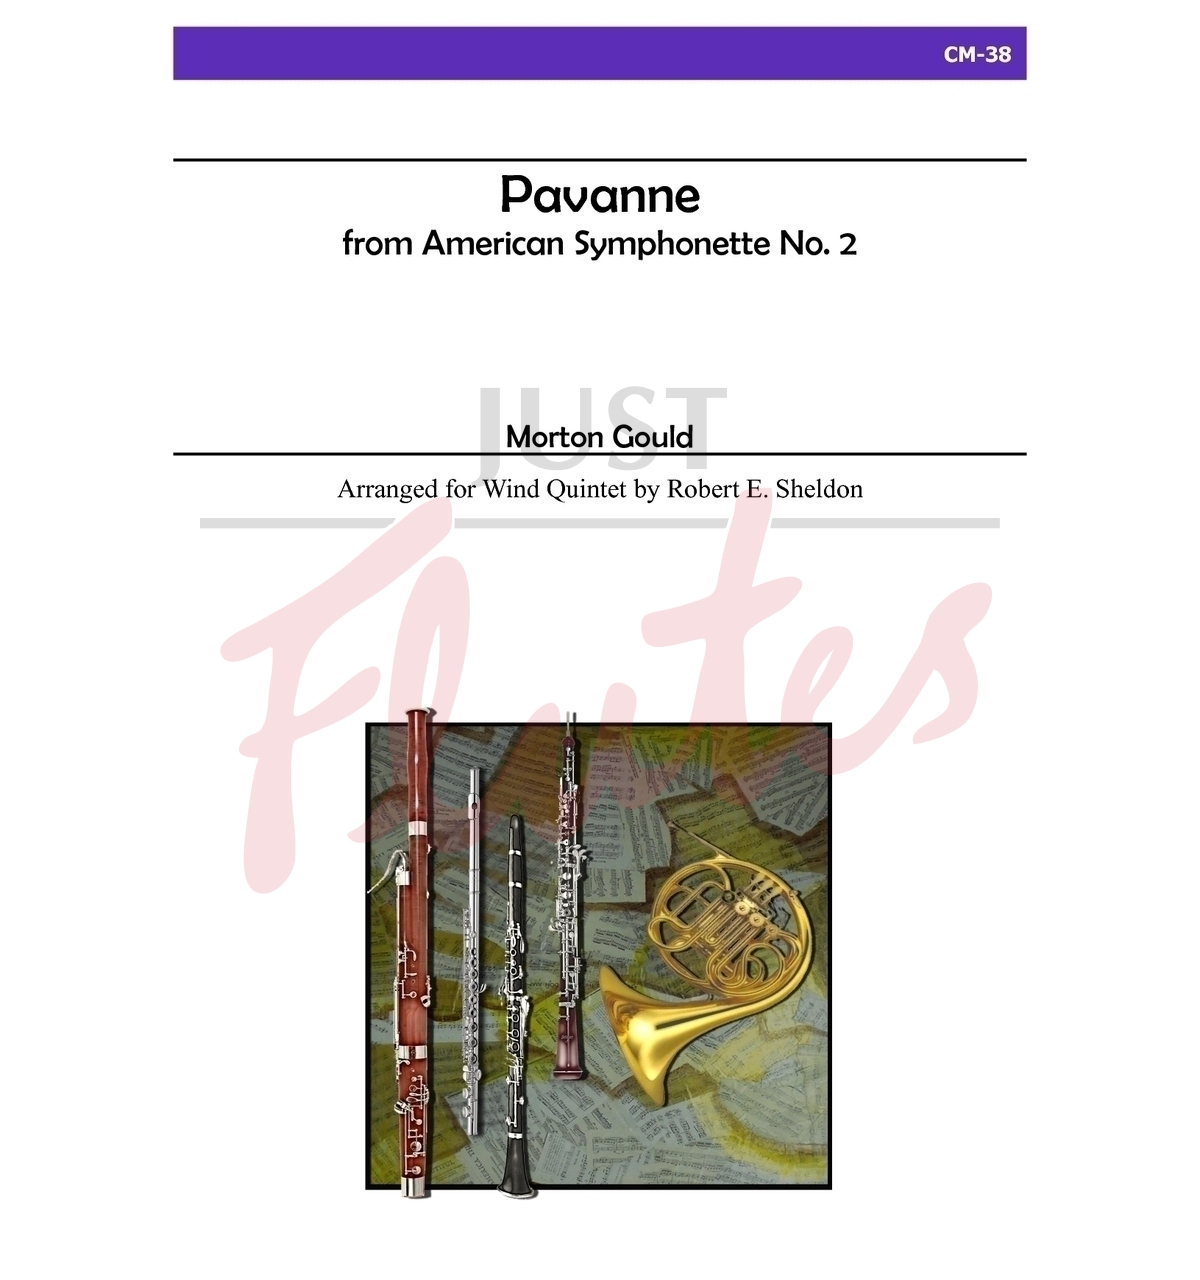 Pavanne from American Symphonette No. 2 arranged for Wind Quintet